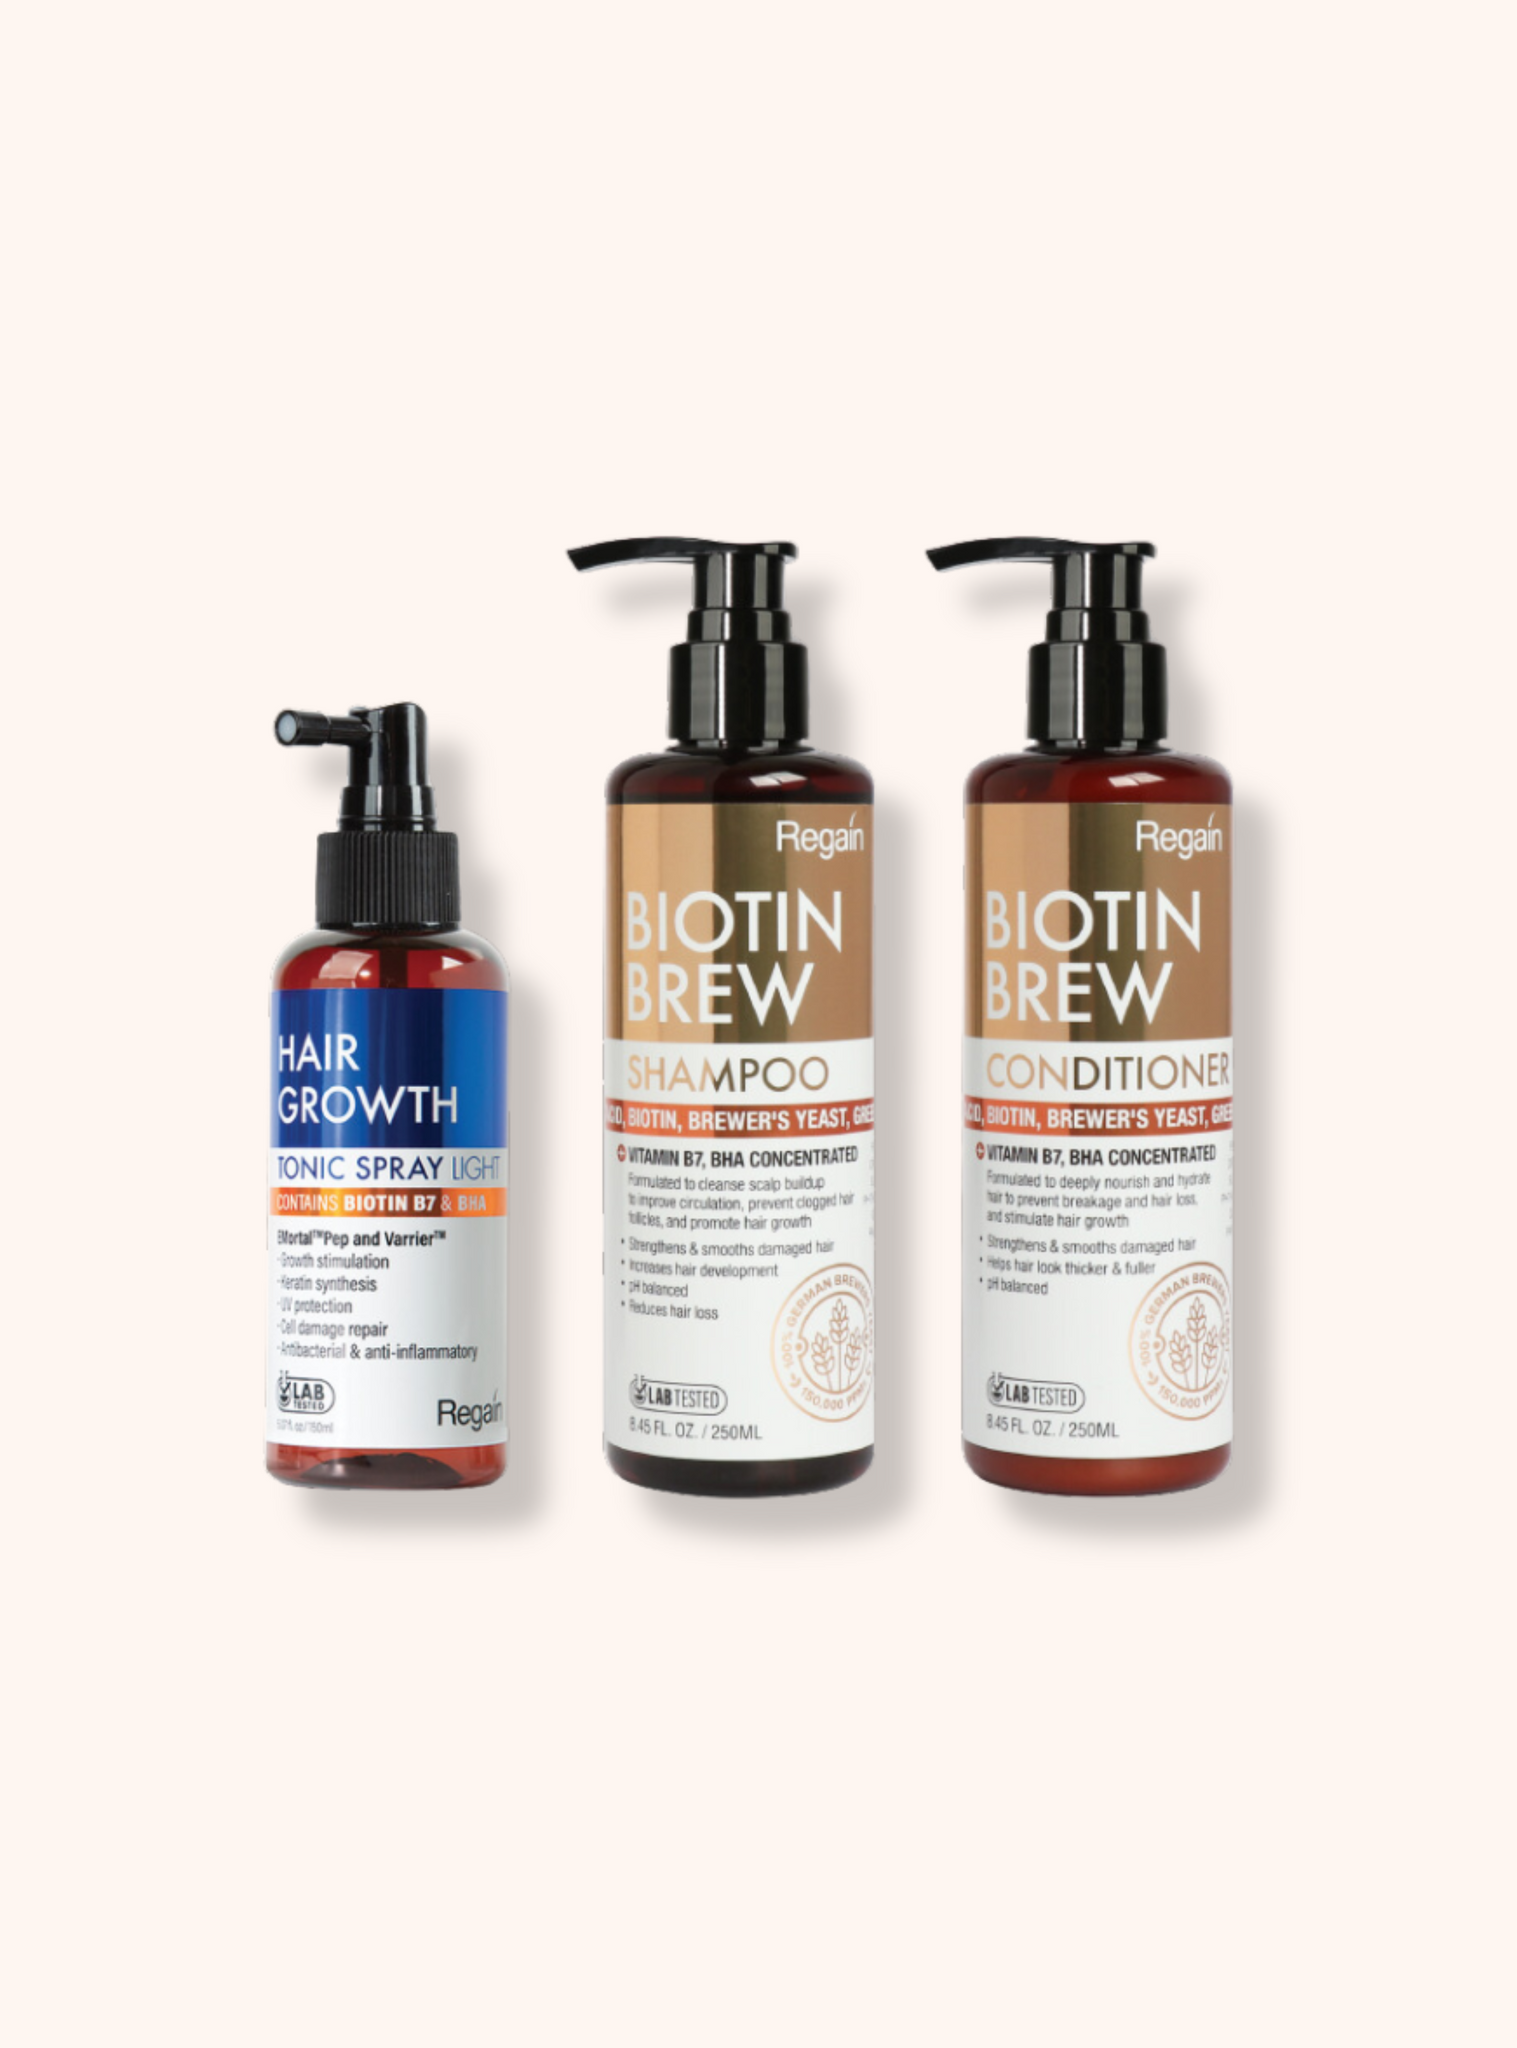 Regain Biotin Brew Hair Growth Set: Shampoo, Conditioner, & Tonic Spray